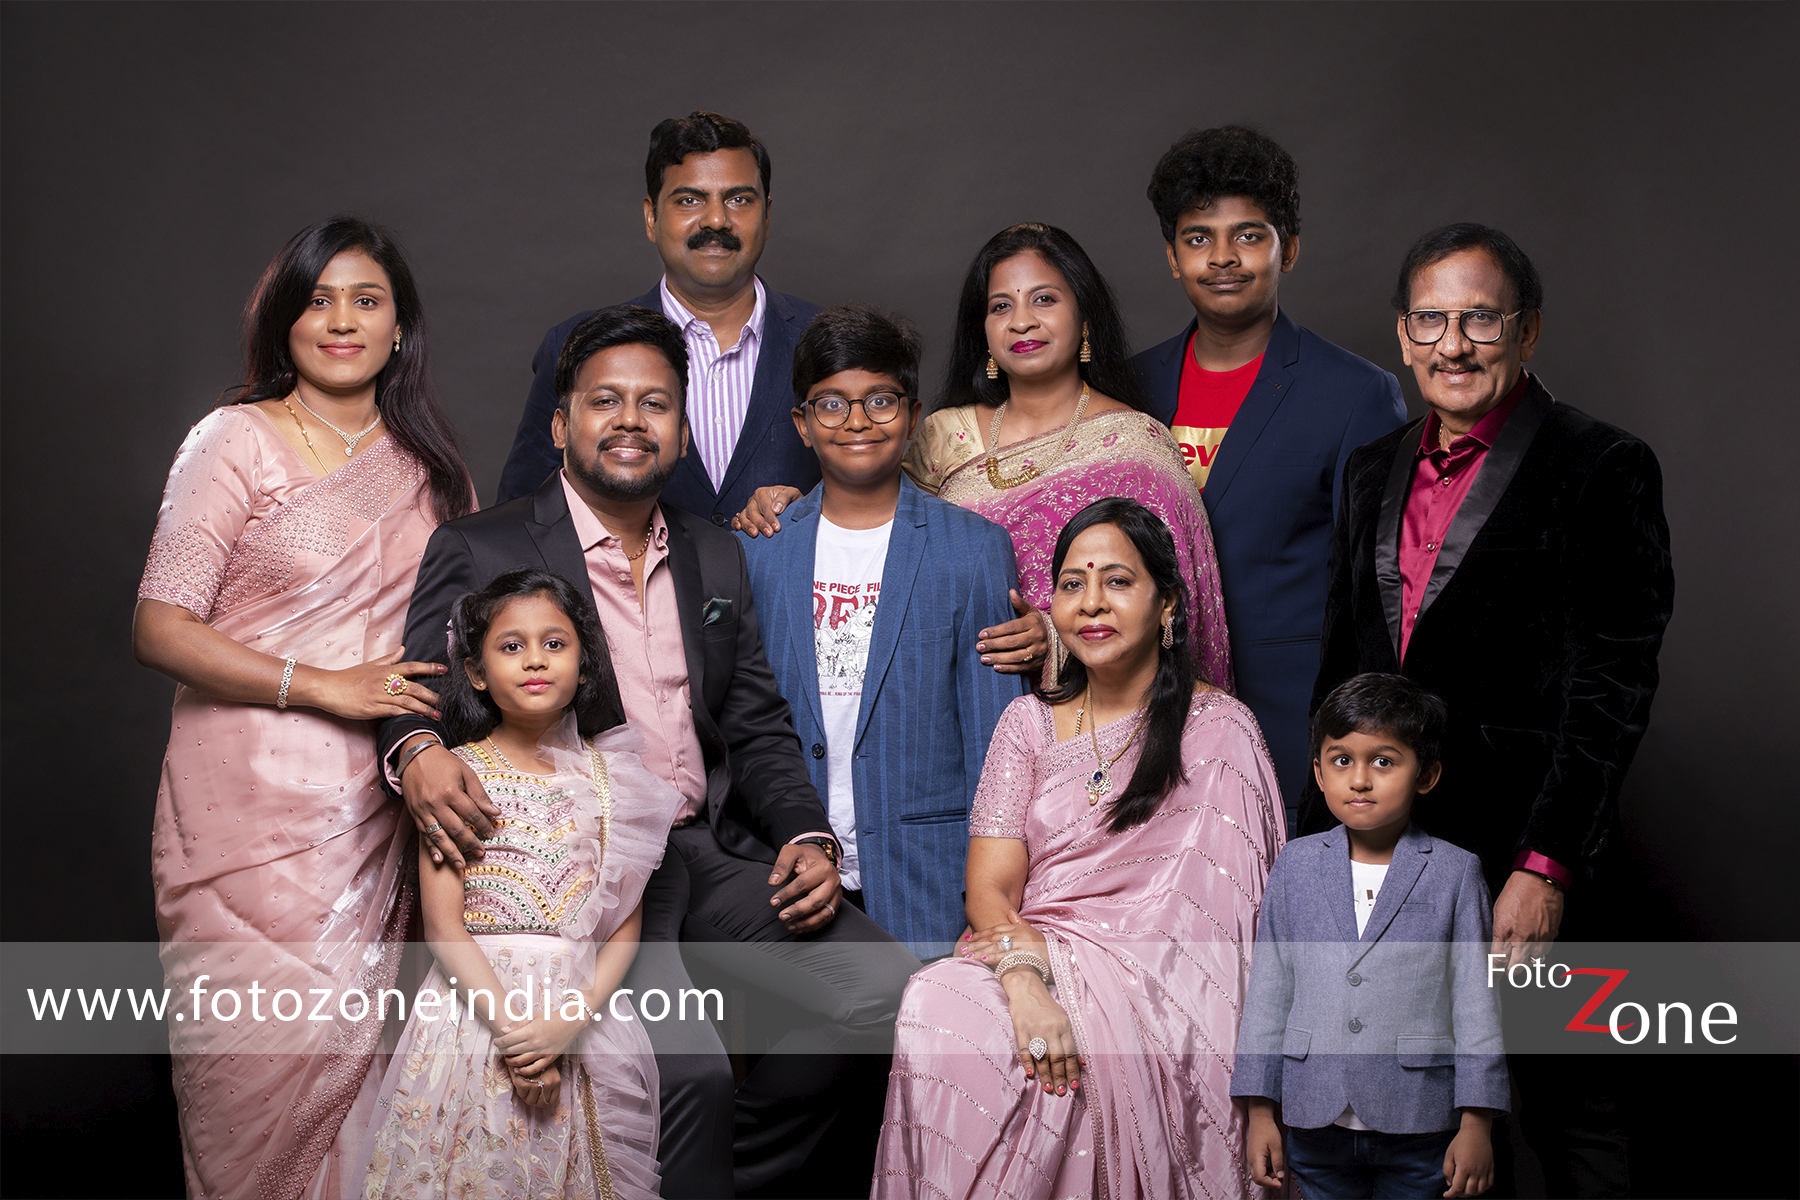 studio family photos - Google Search | Photography poses family, Family  photo studio, Studio family portraits